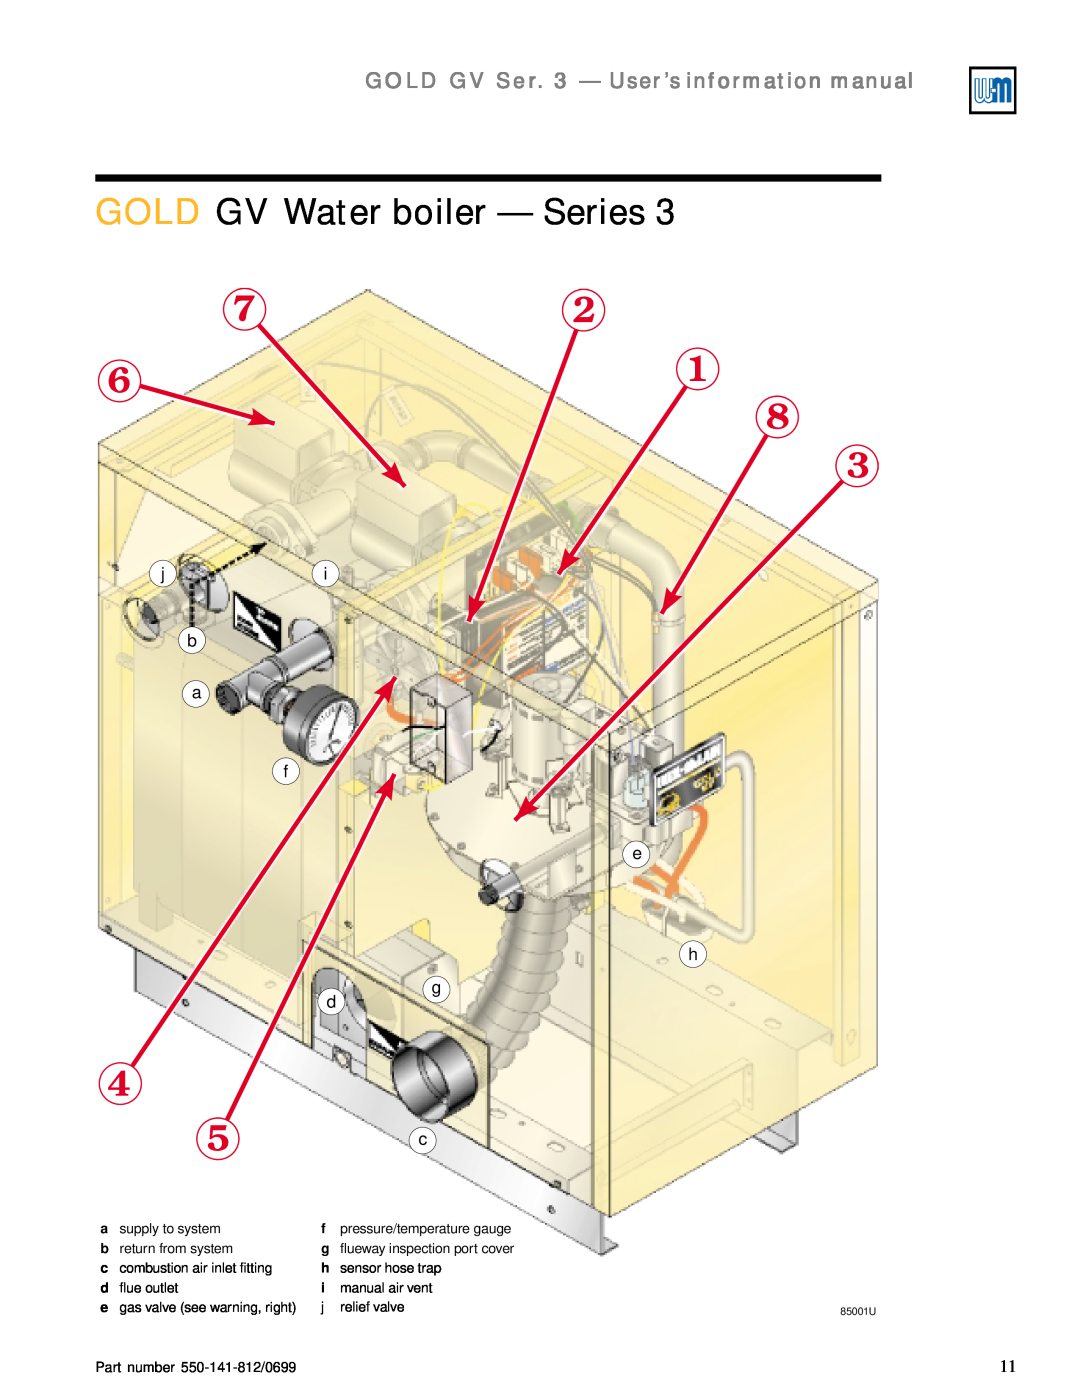 Weil-McLain 3 Series GOLD GV Water boiler — Series, GOLD GV Ser. 3 — User’s information manual, ji b a f e h g d c 